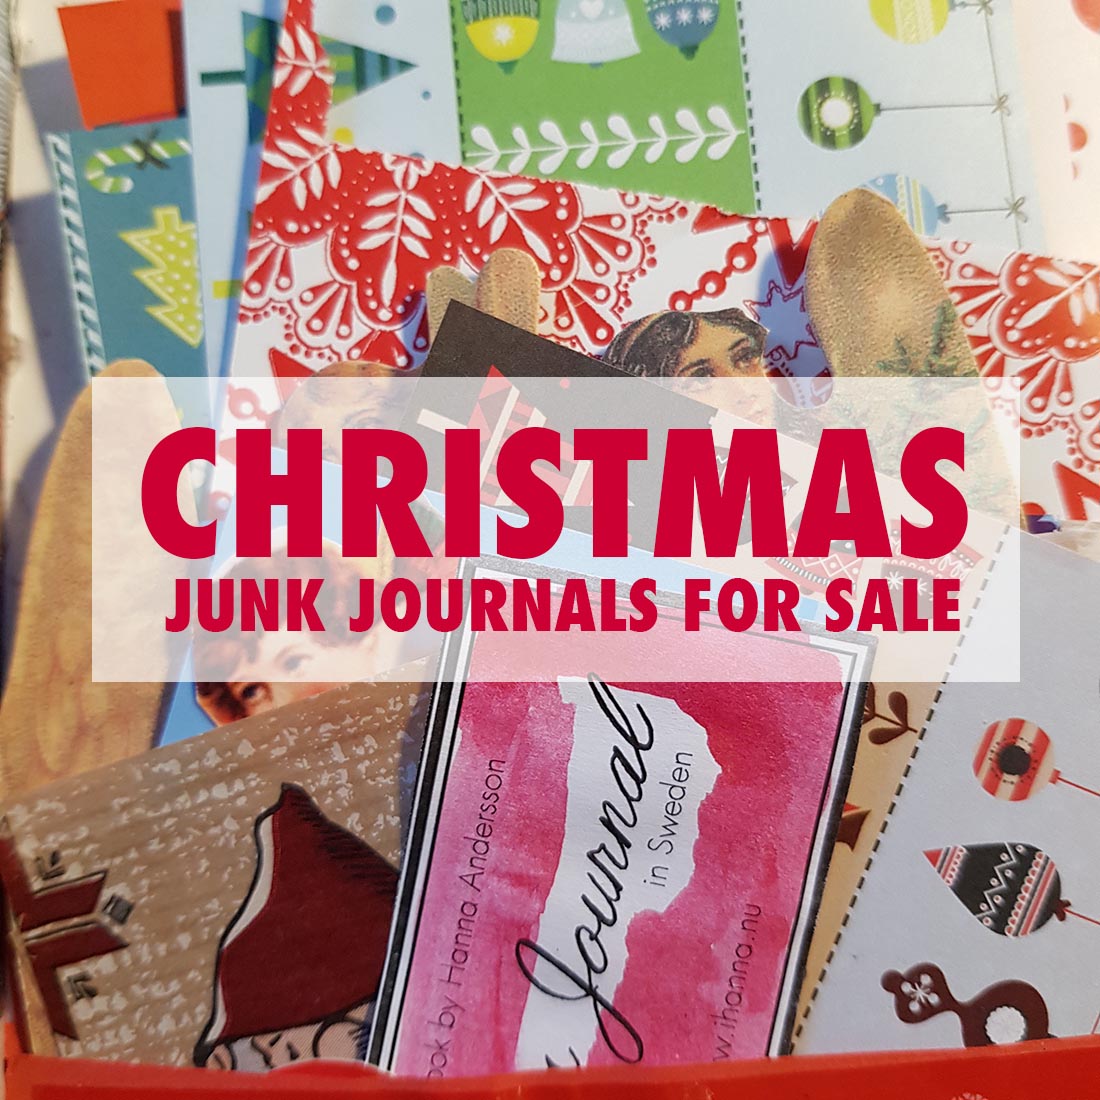 Shop for Christmas Junk Journals